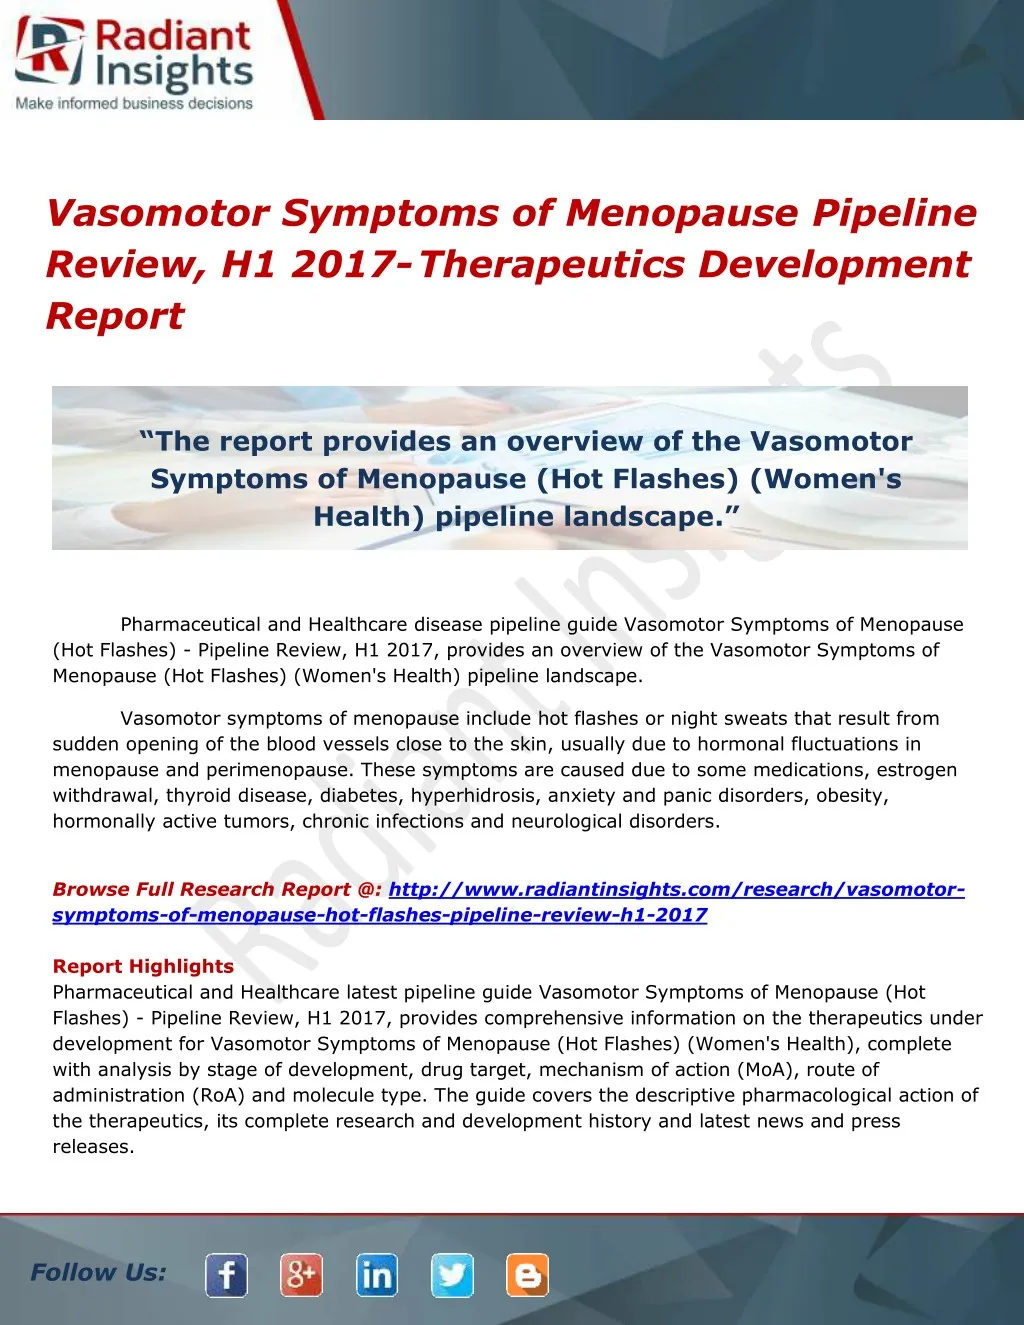 vasomotor symptoms of menopause pipeline review